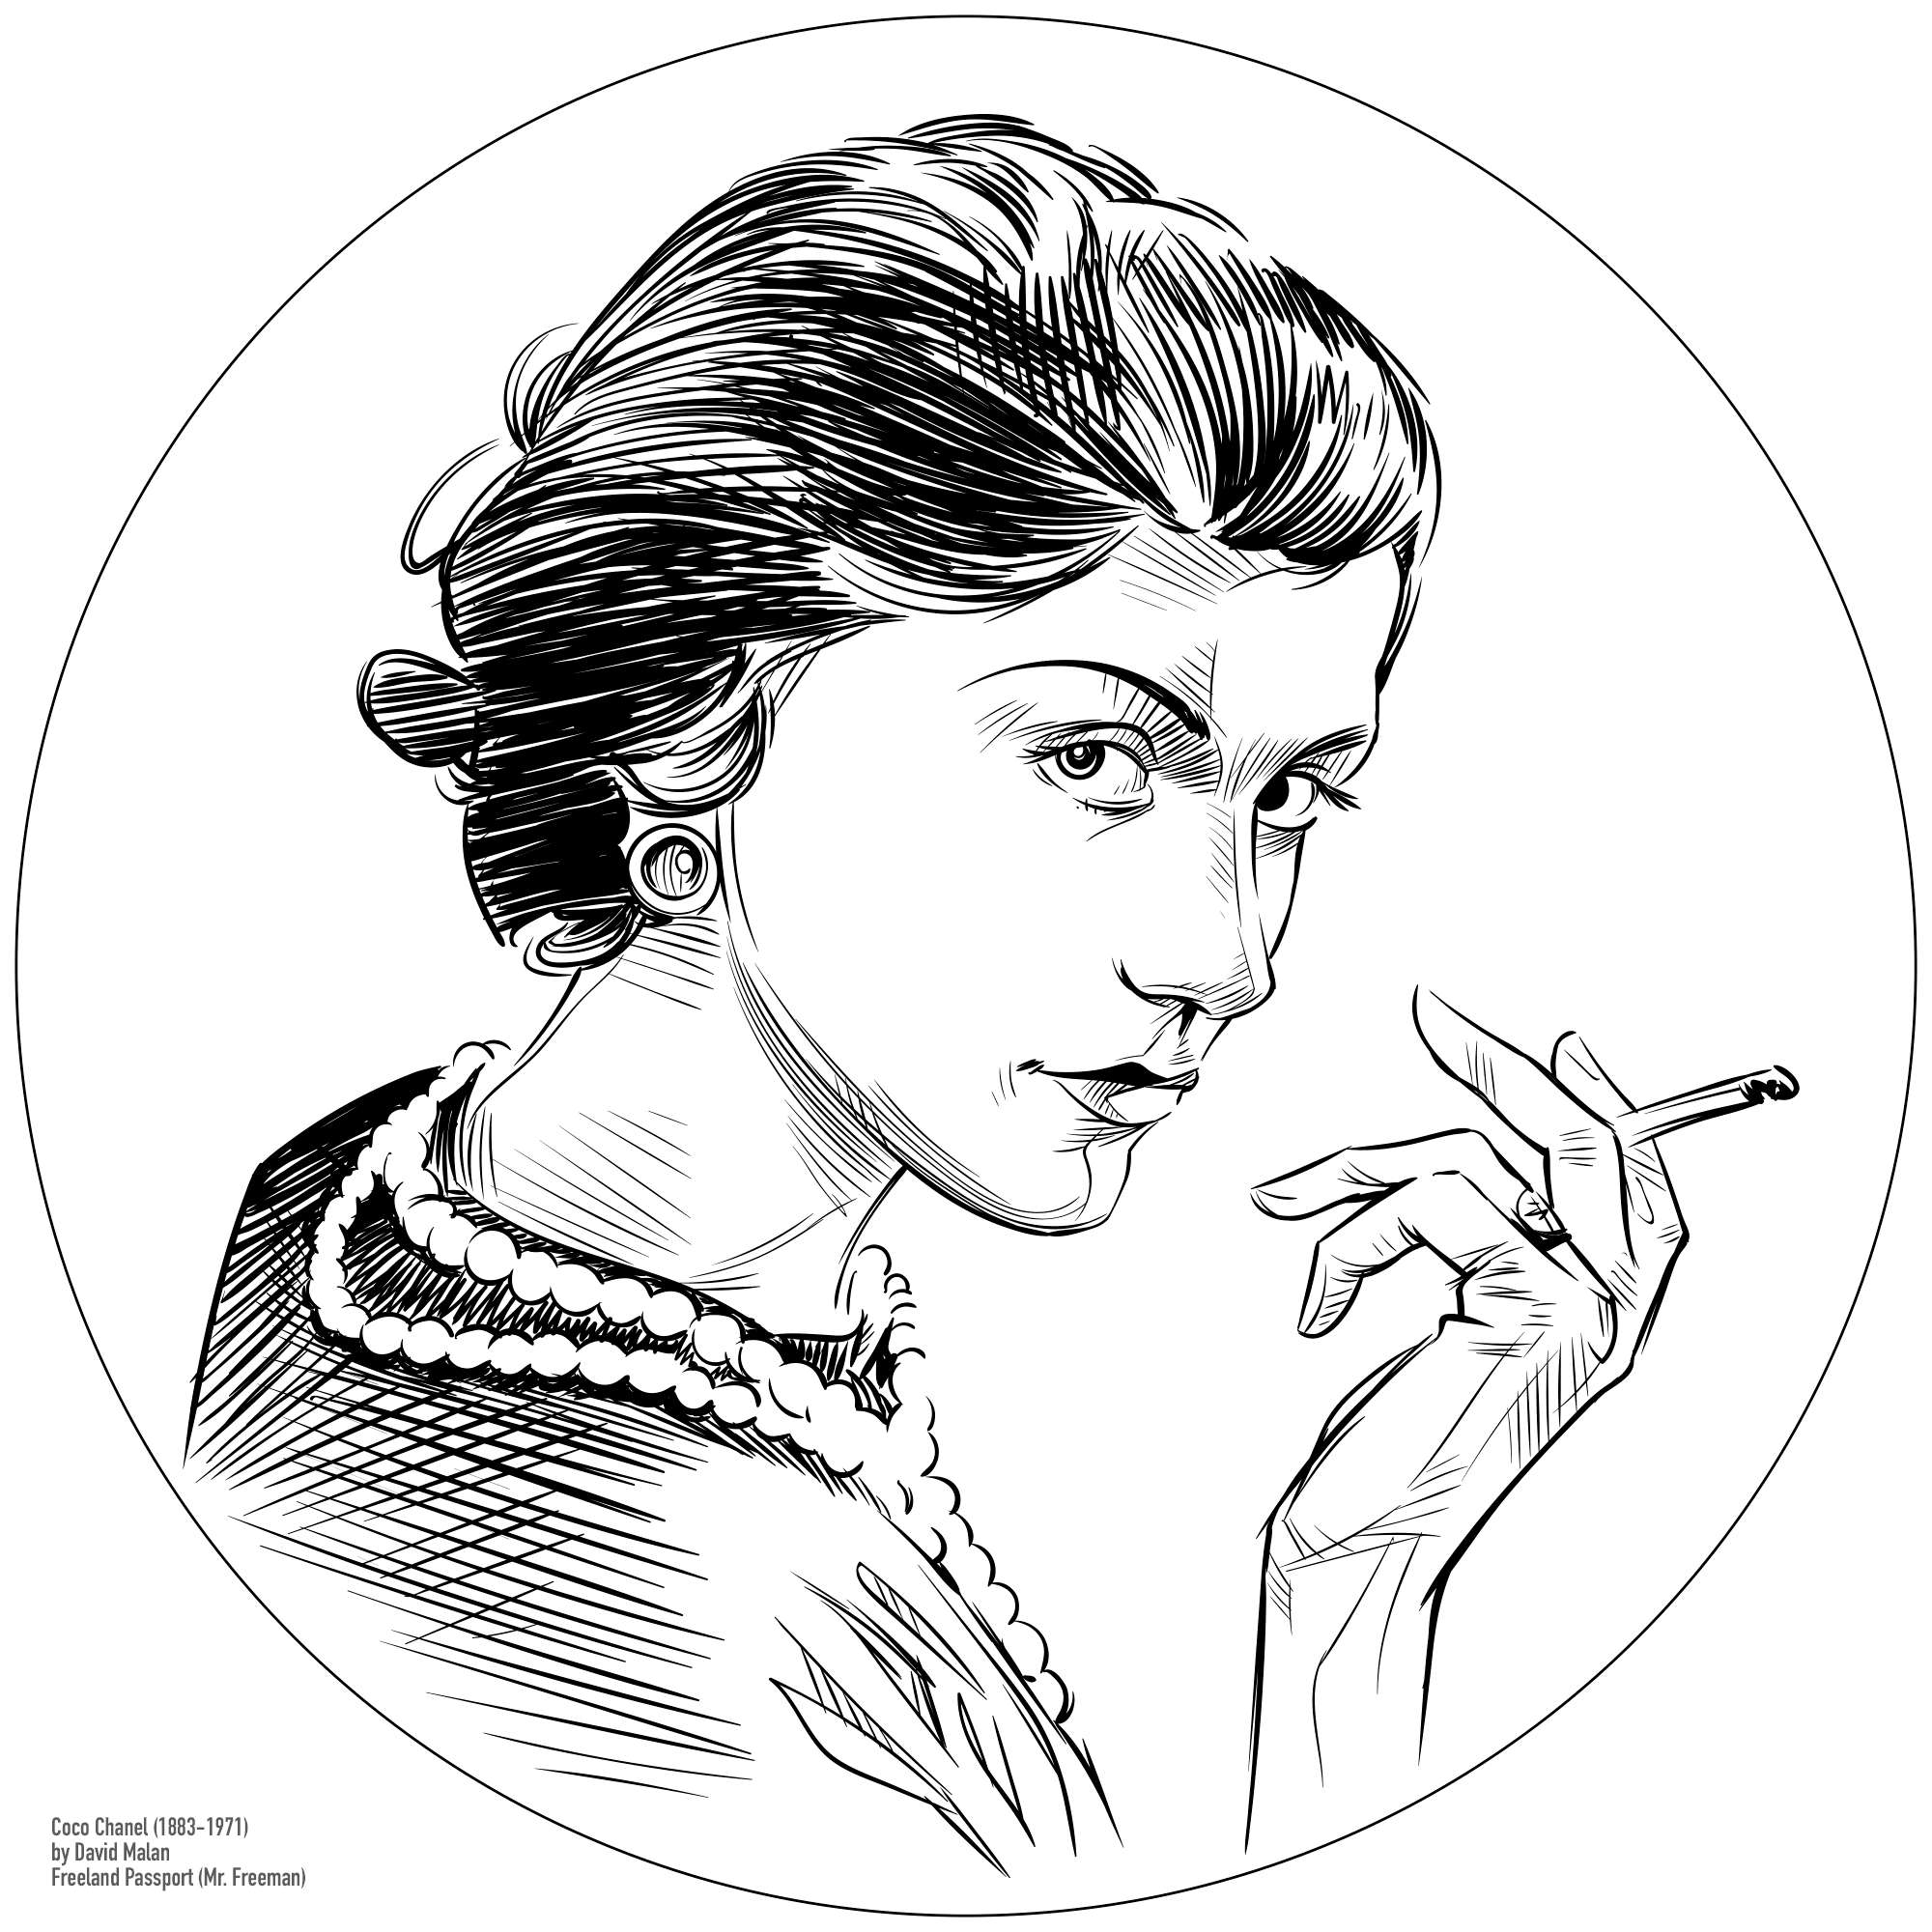 Gabrielle Bonheur “Coco” Chanel (19 August 1883 – 10 Janua…